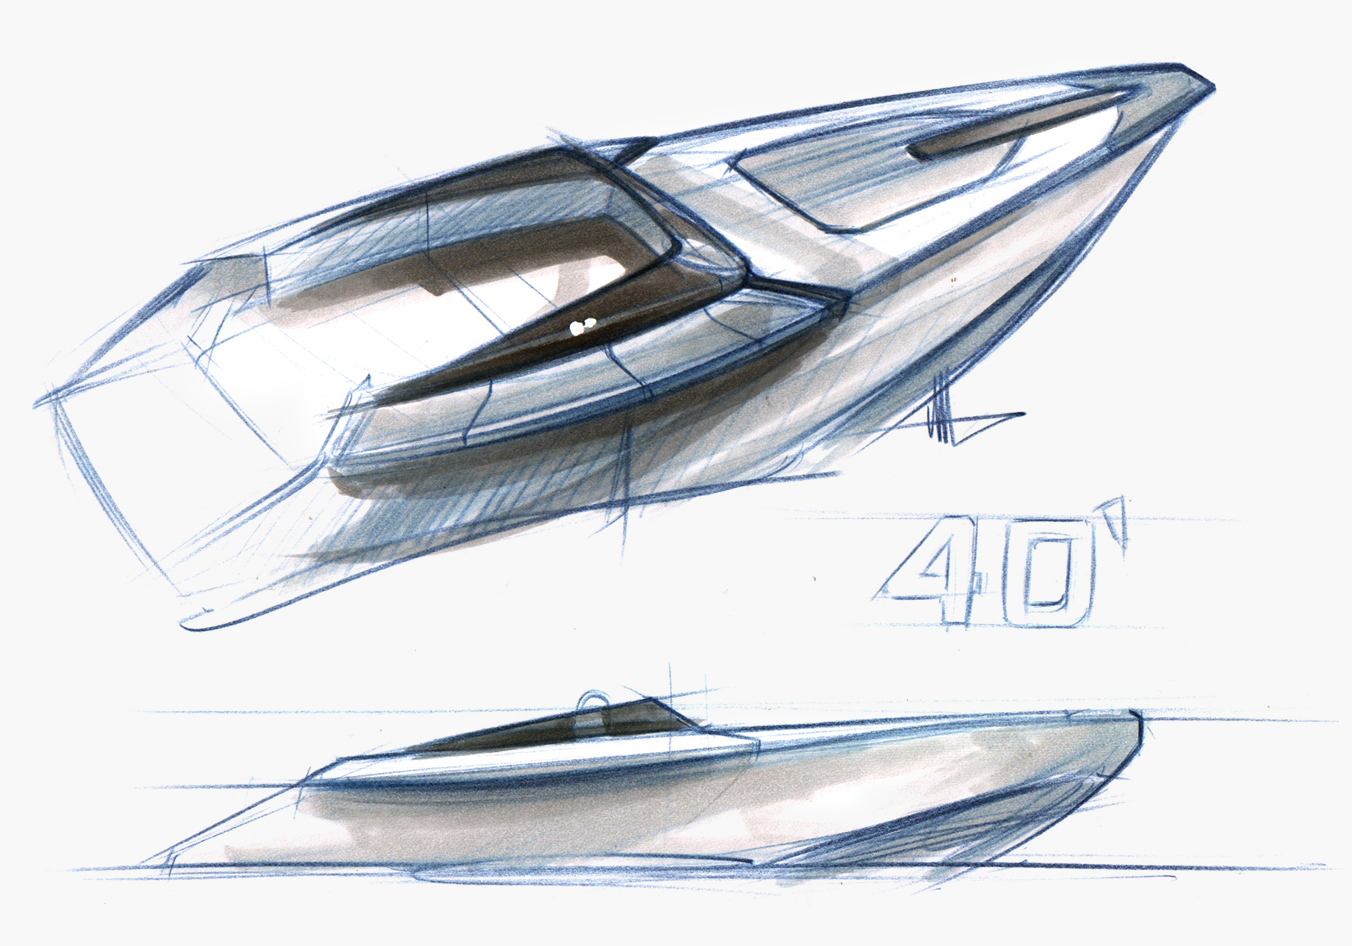 Yacht design - 40 Feet - Power boat - Concept sketch1a - Davide Mezzasalma - Furniture design - Berlin